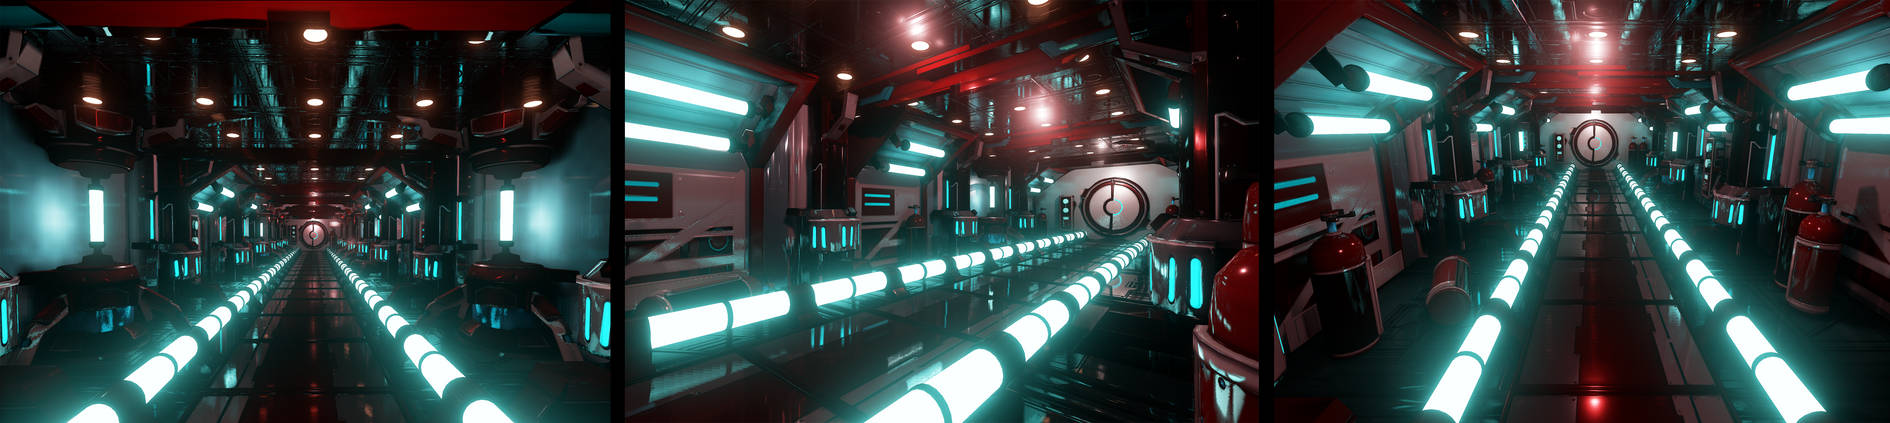 Sci-Fi Hallway--Clean version